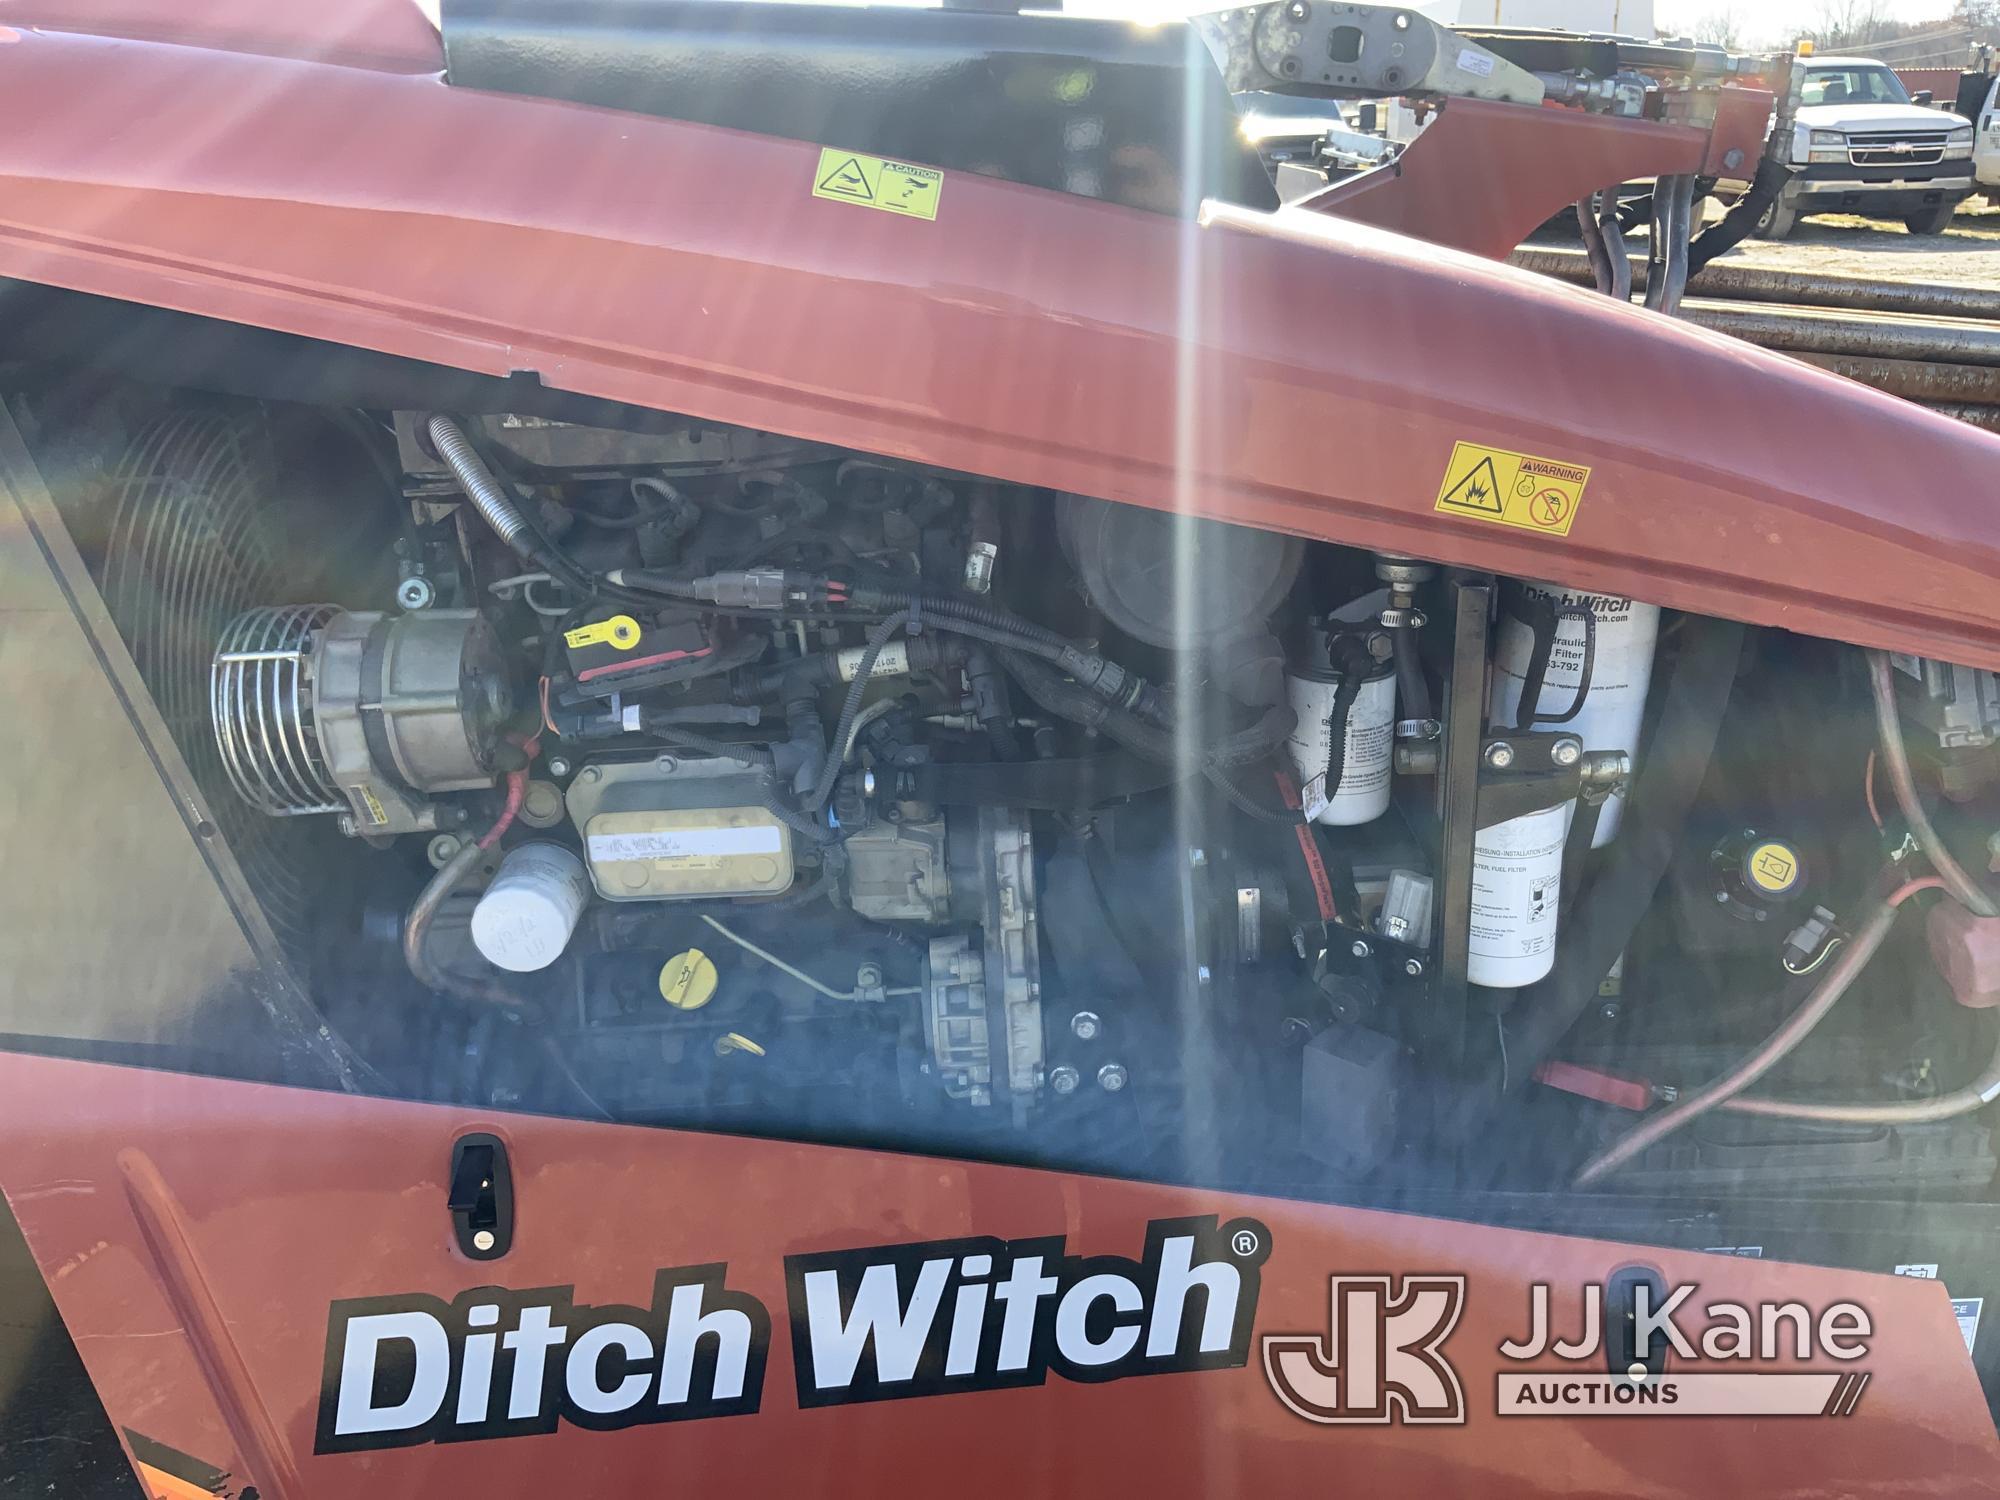 (Charlotte, MI) 2019 Ditch Witch JT10 Directional Boring Machine Runs, Moves